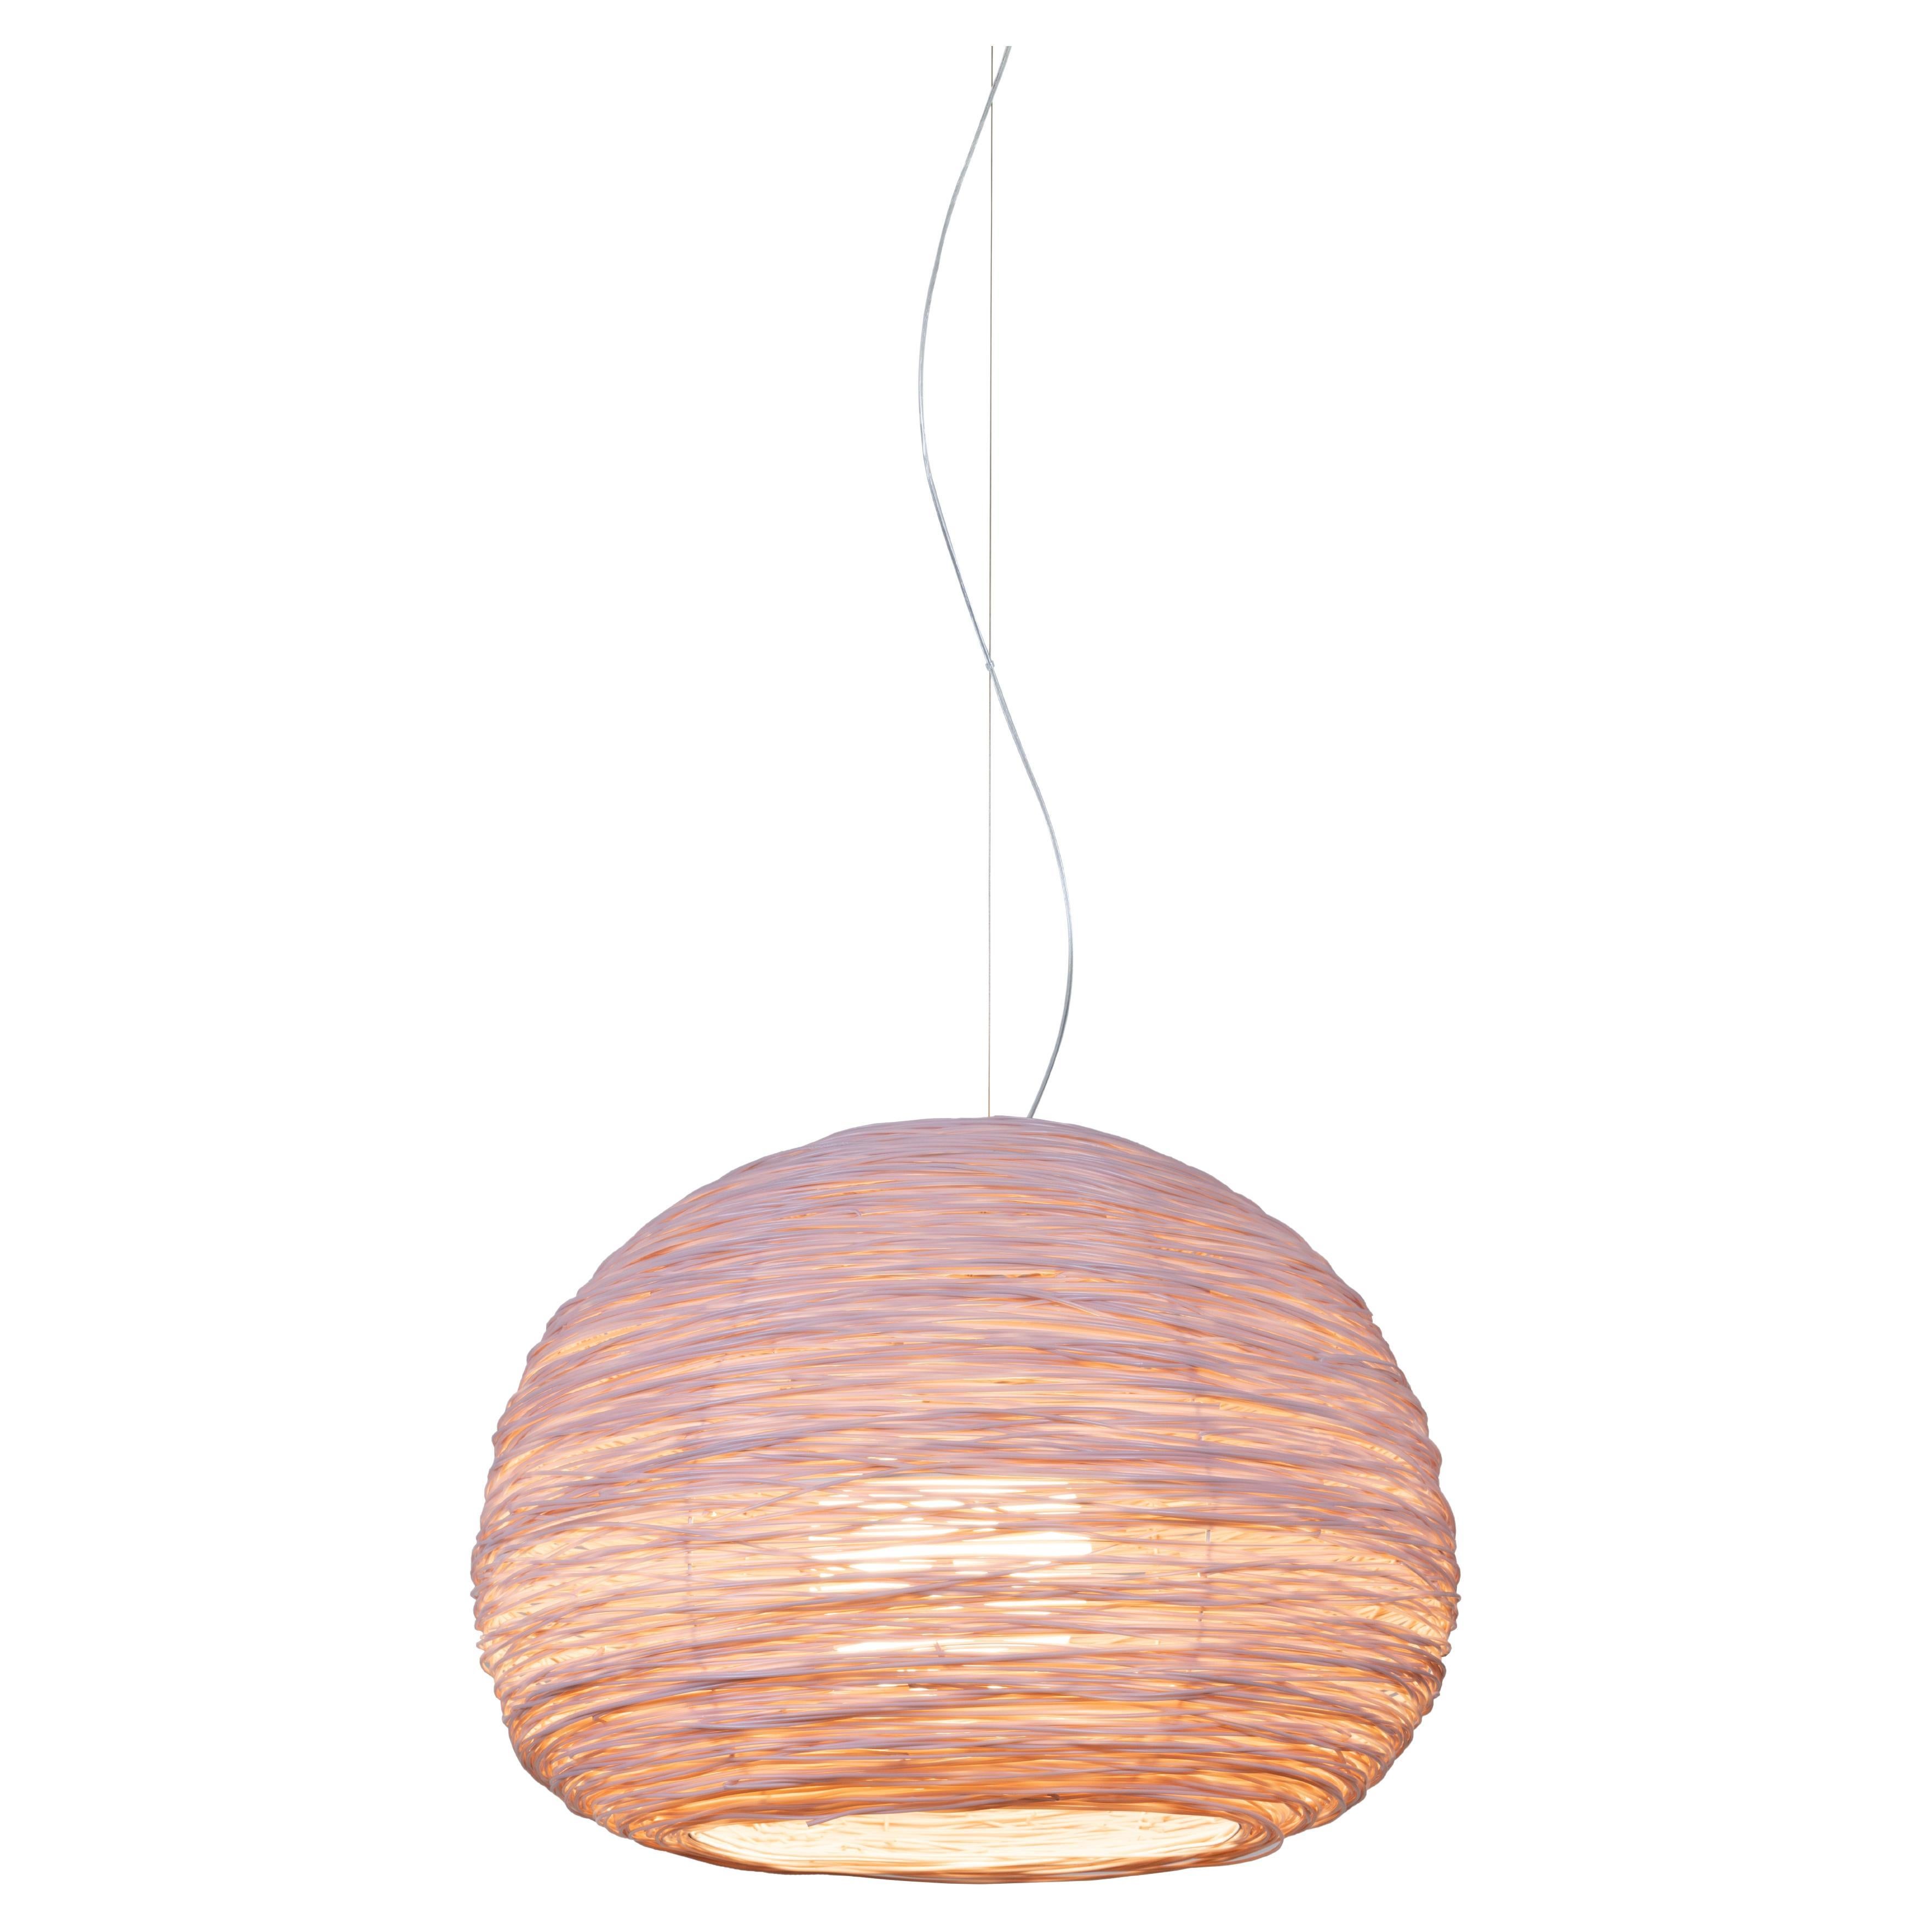 Shelter pendant by Ango, Hand-Woven Semi-Outdoor Pendant Light 